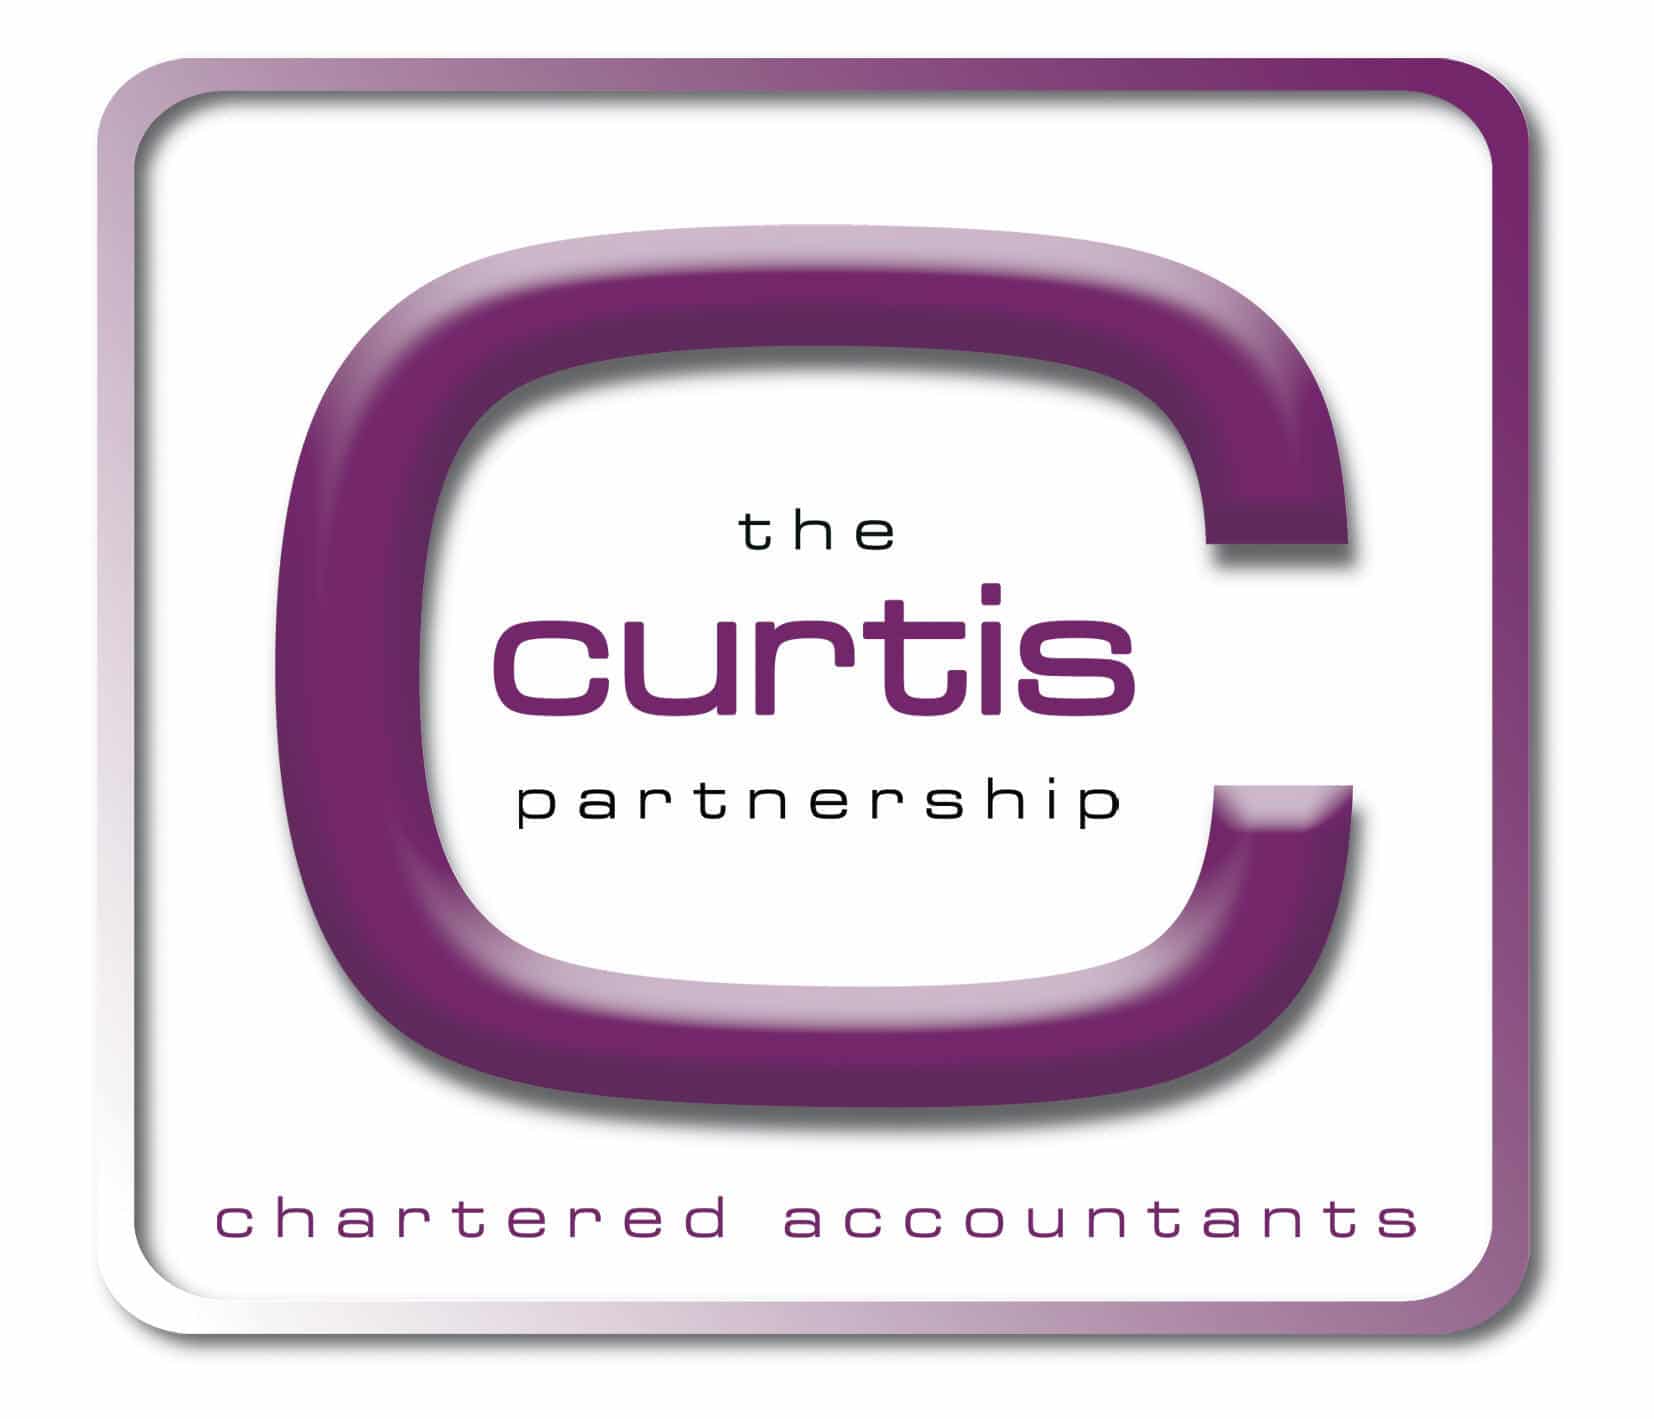 The Curtis Partnership